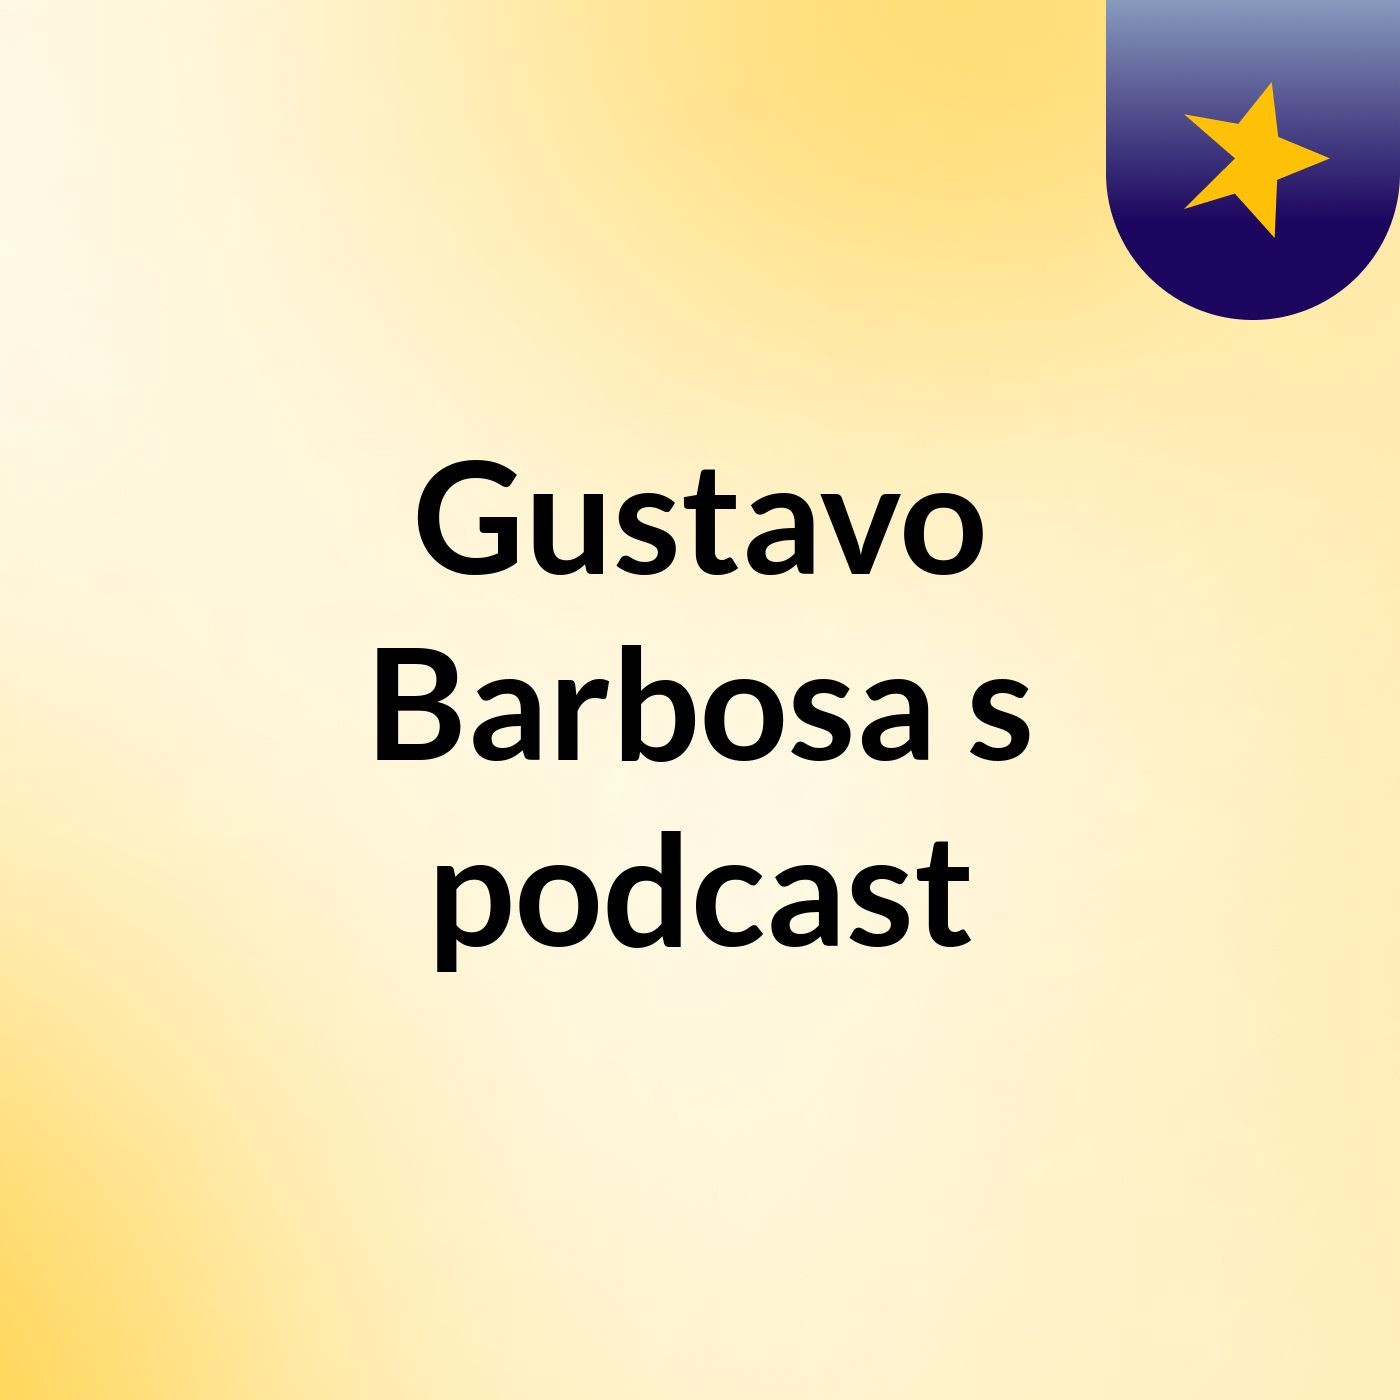 Gustavo Barbosa's podcast